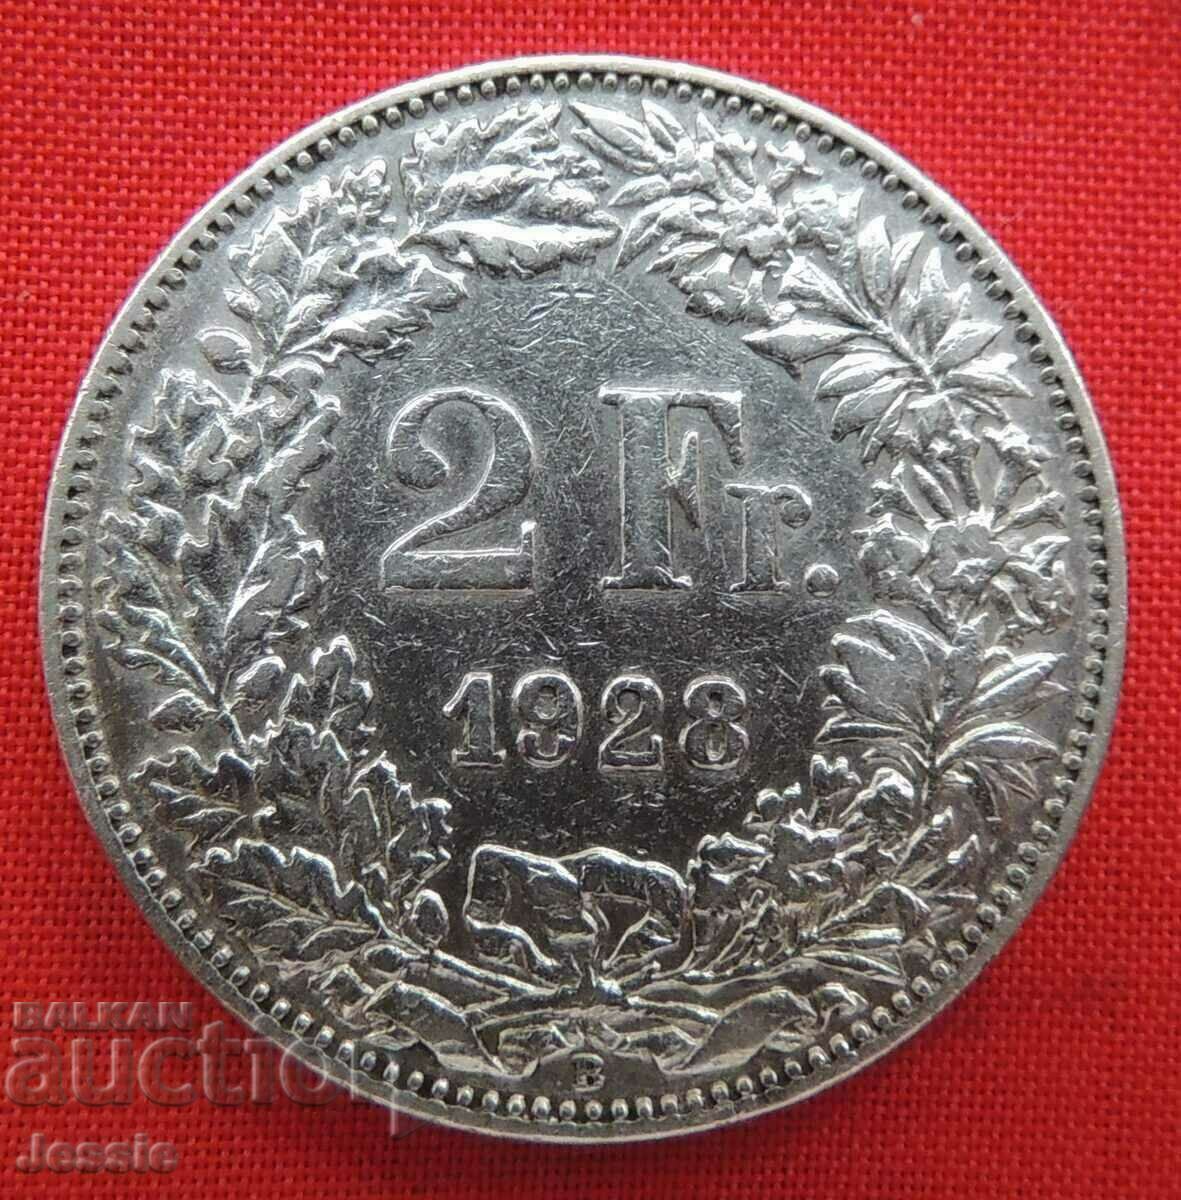 2 Francs 1928 B Switzerland Silver